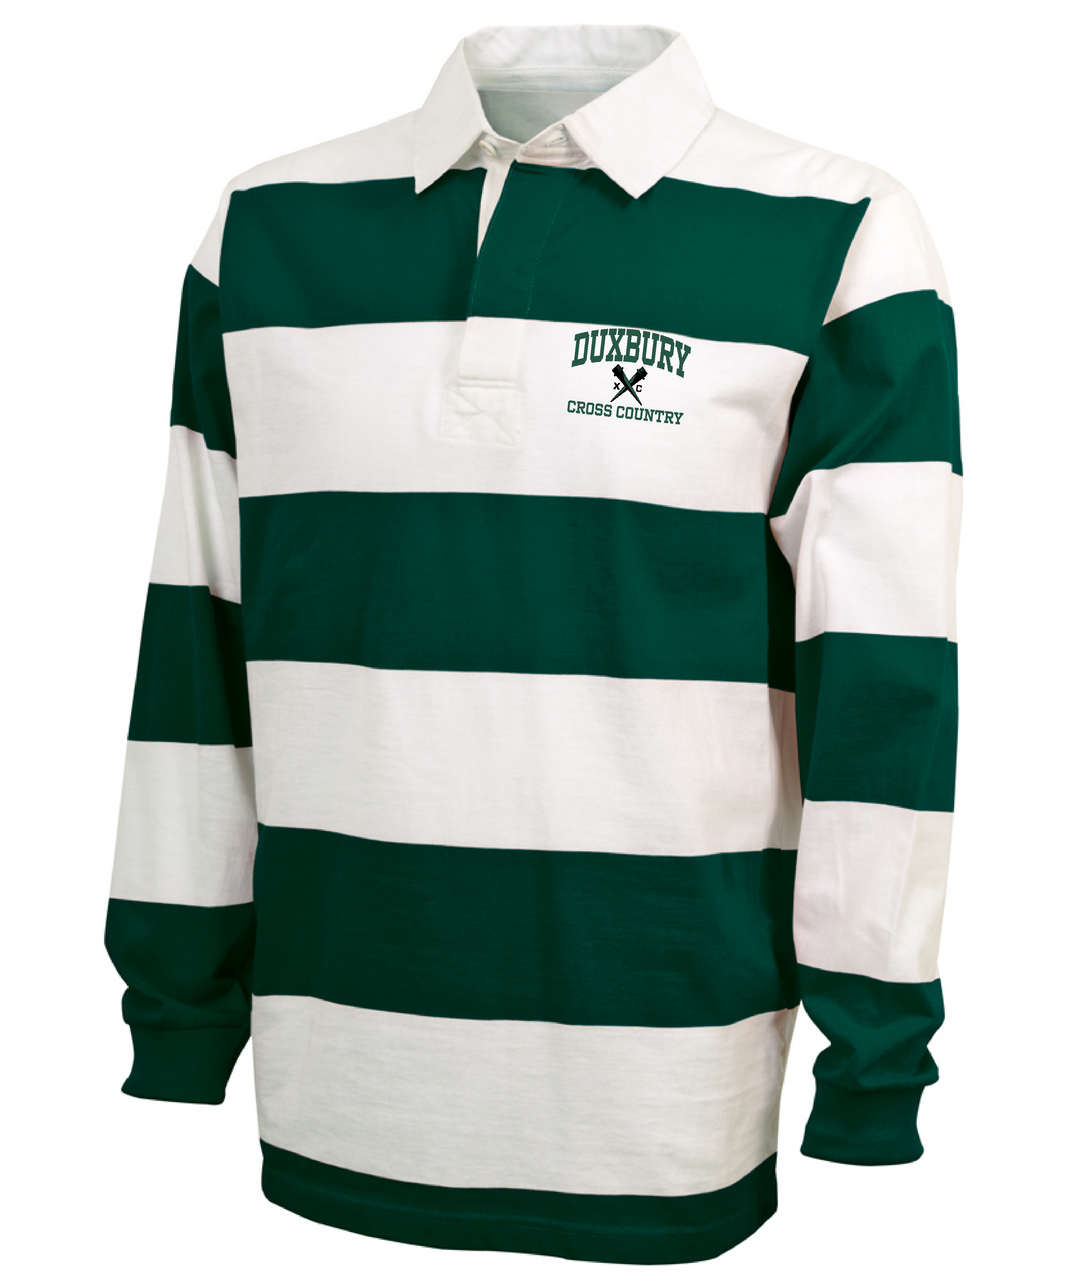 Duxbury Cross Country Unisex Classic Rugby Shirt (9278)